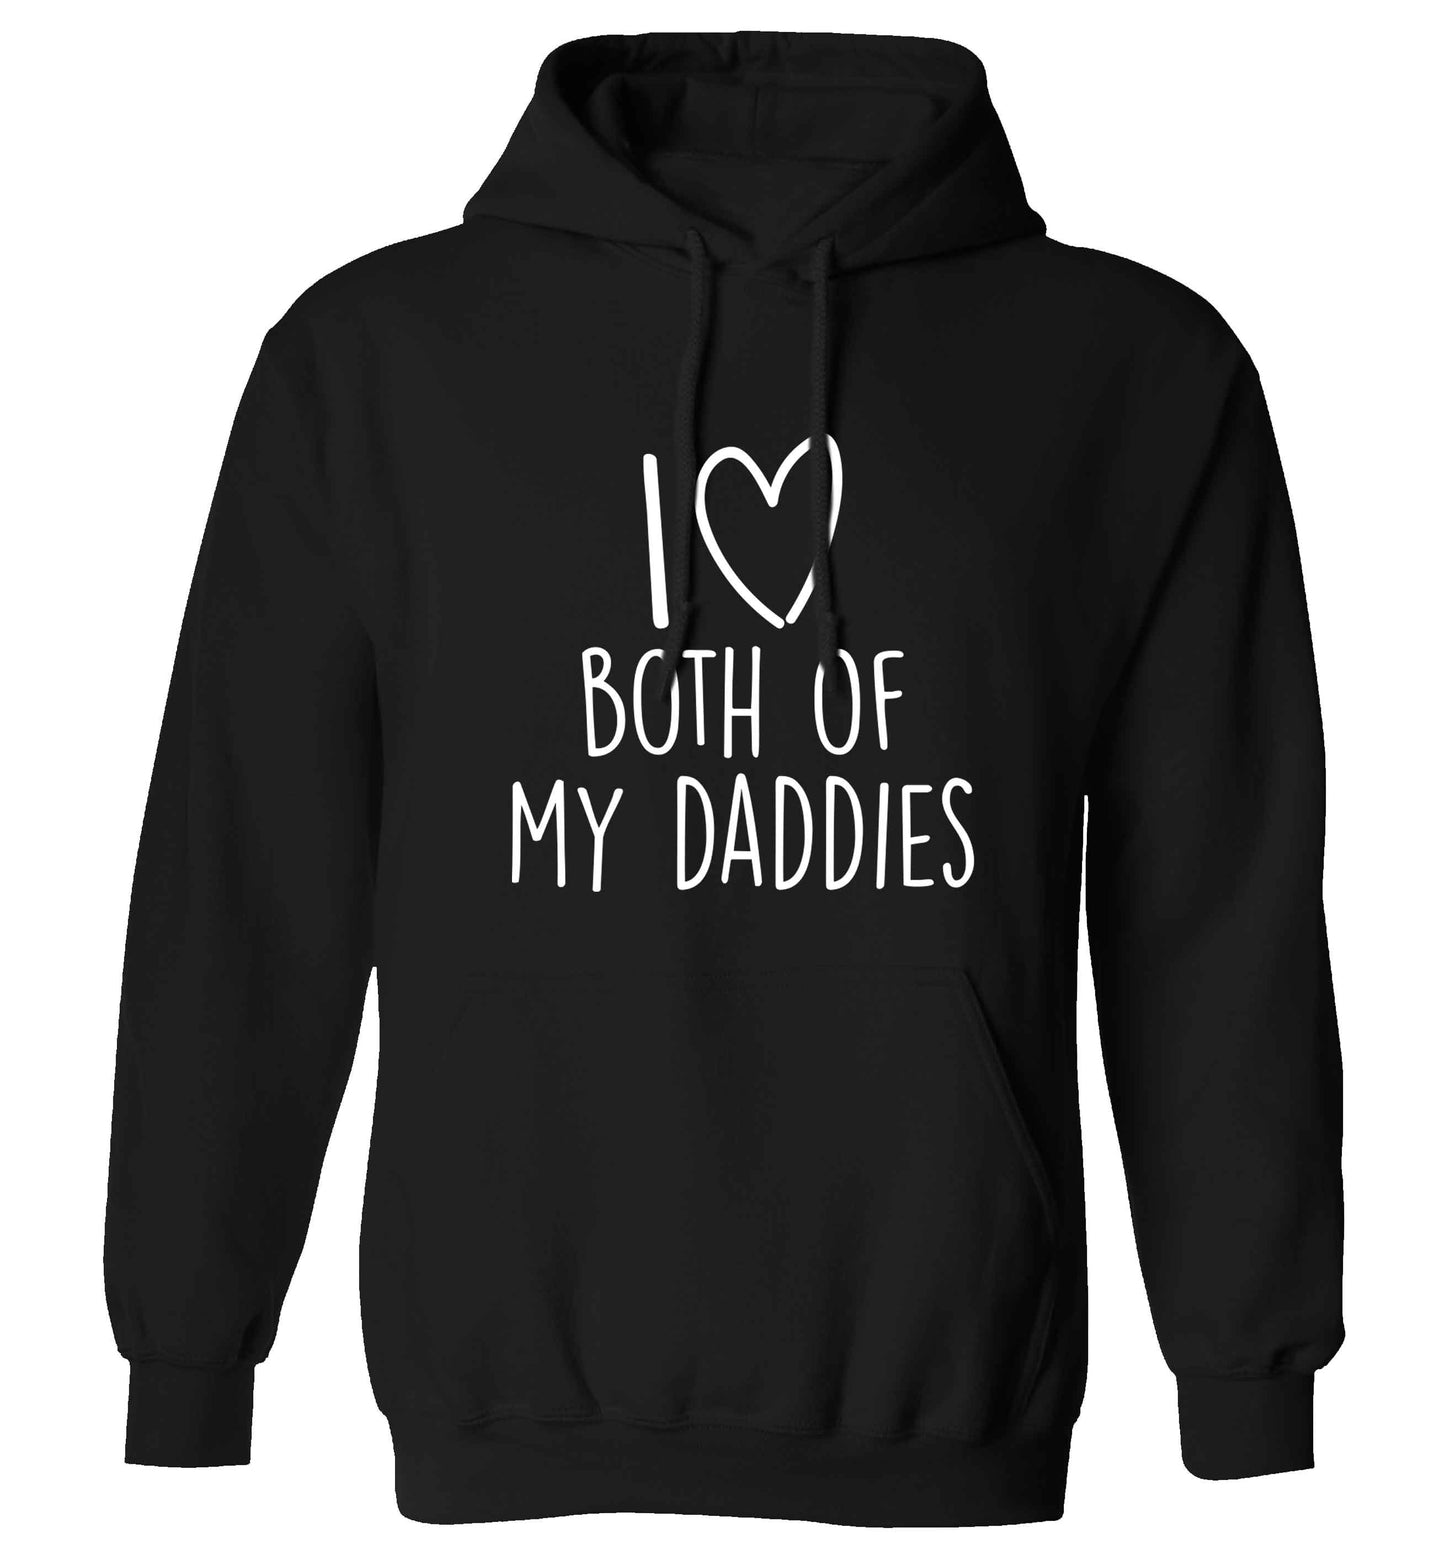 I love both of my daddies adults unisex black hoodie 2XL